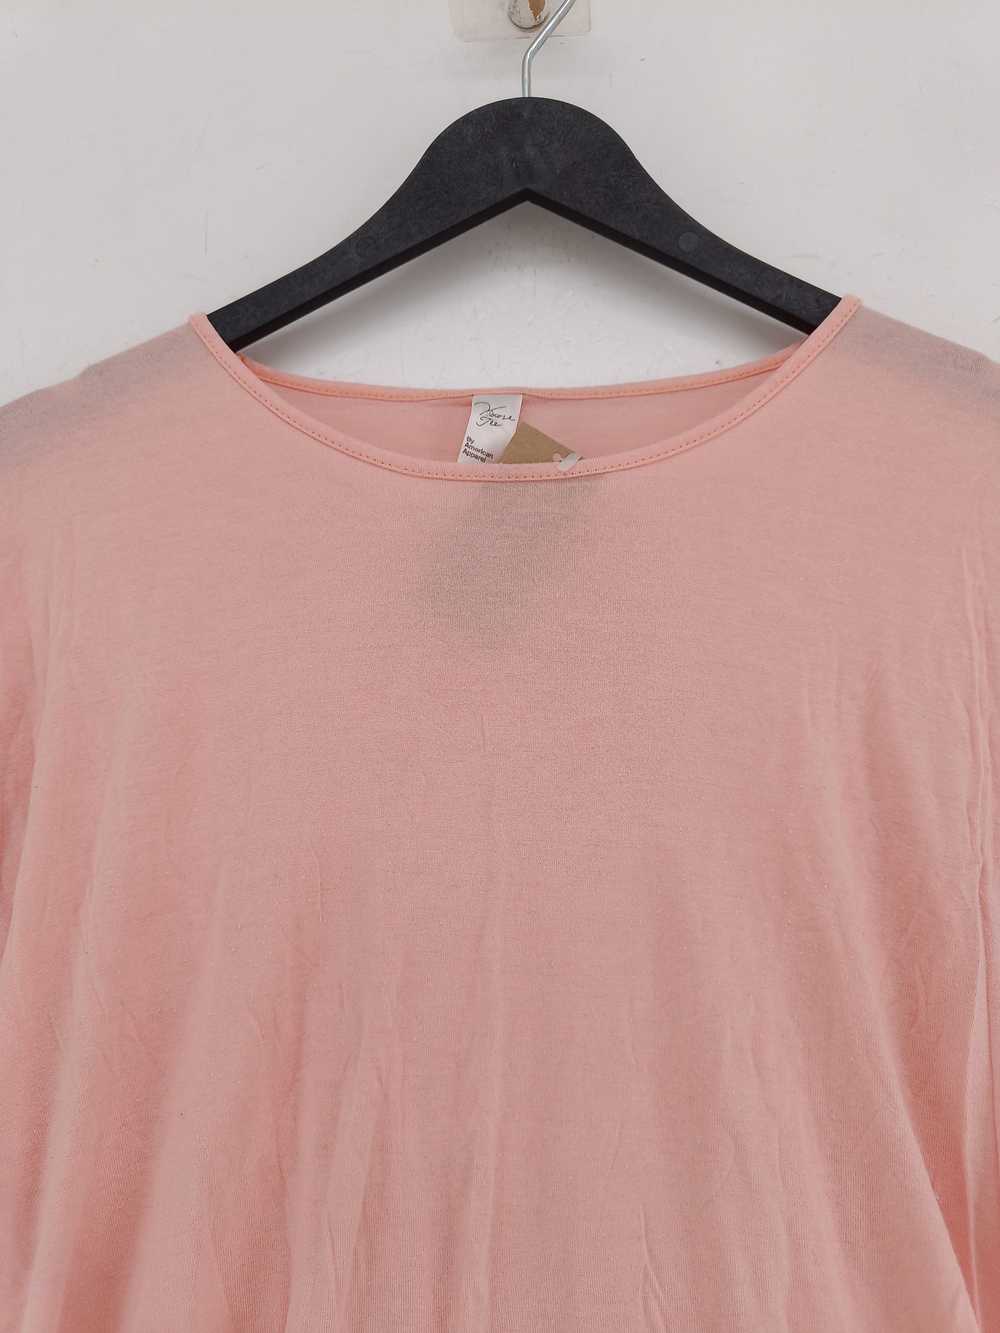 American Apparel Women's T-Shirt M Pink 100% Visc… - image 4